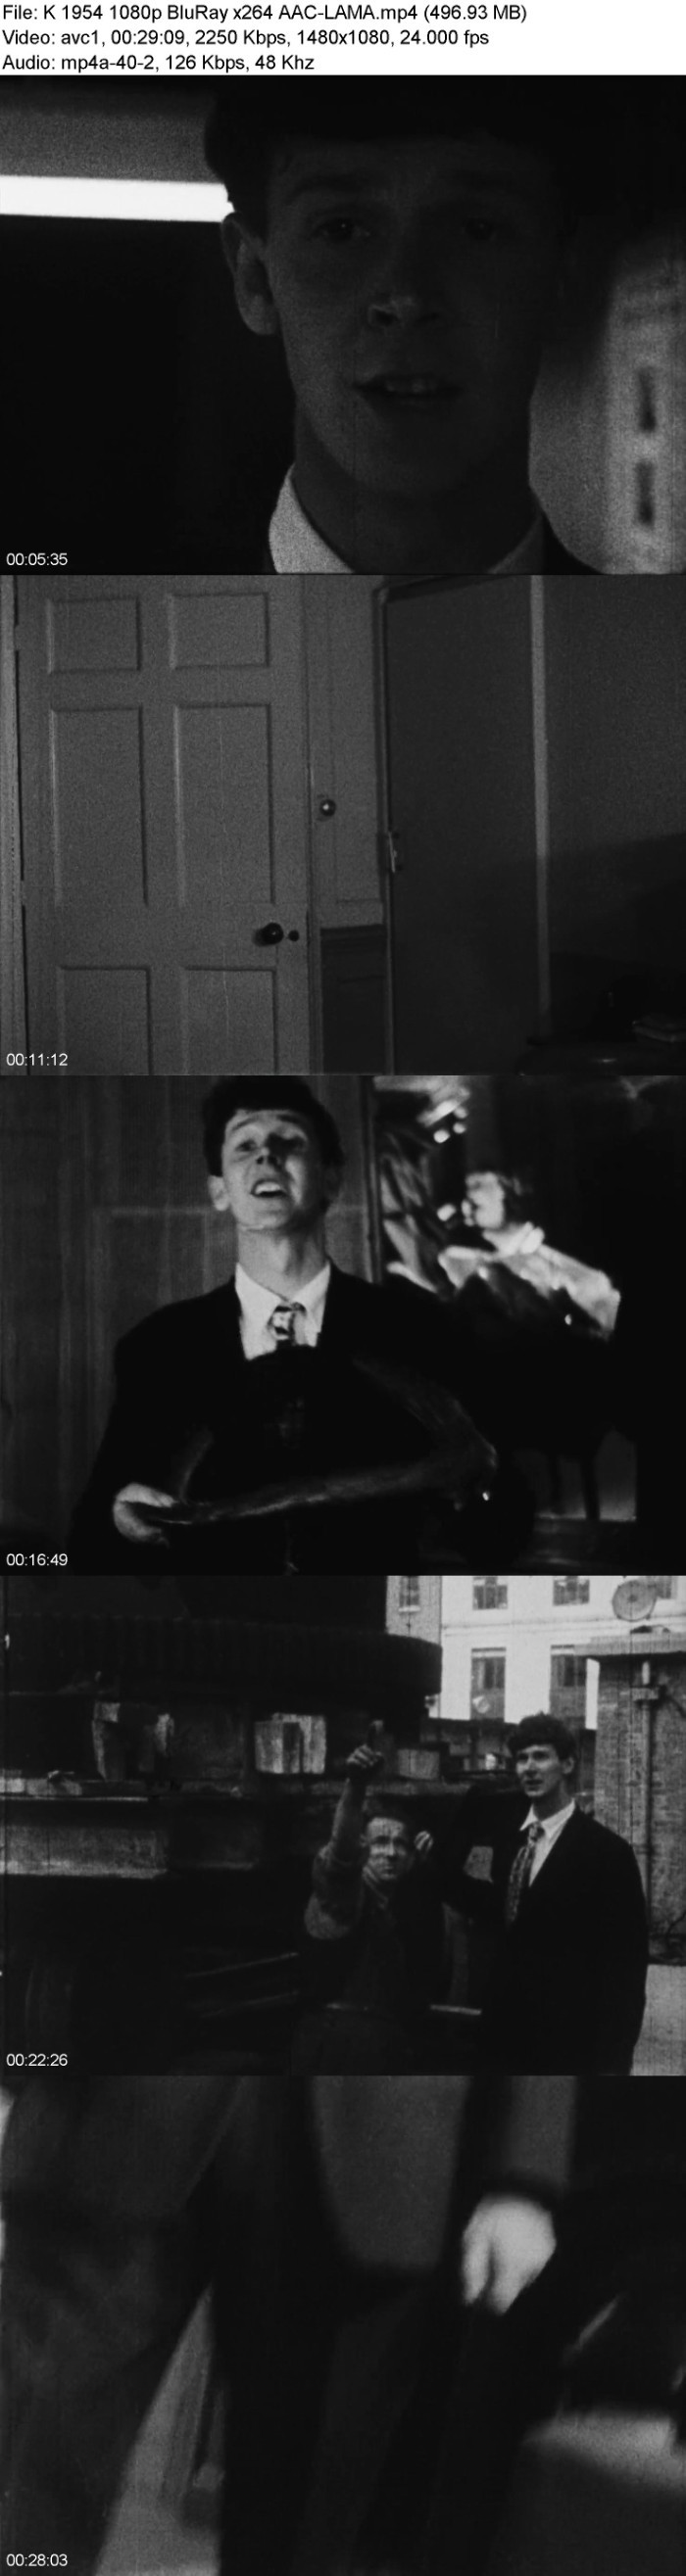 K (1954) 1080p BluRay-LAMA